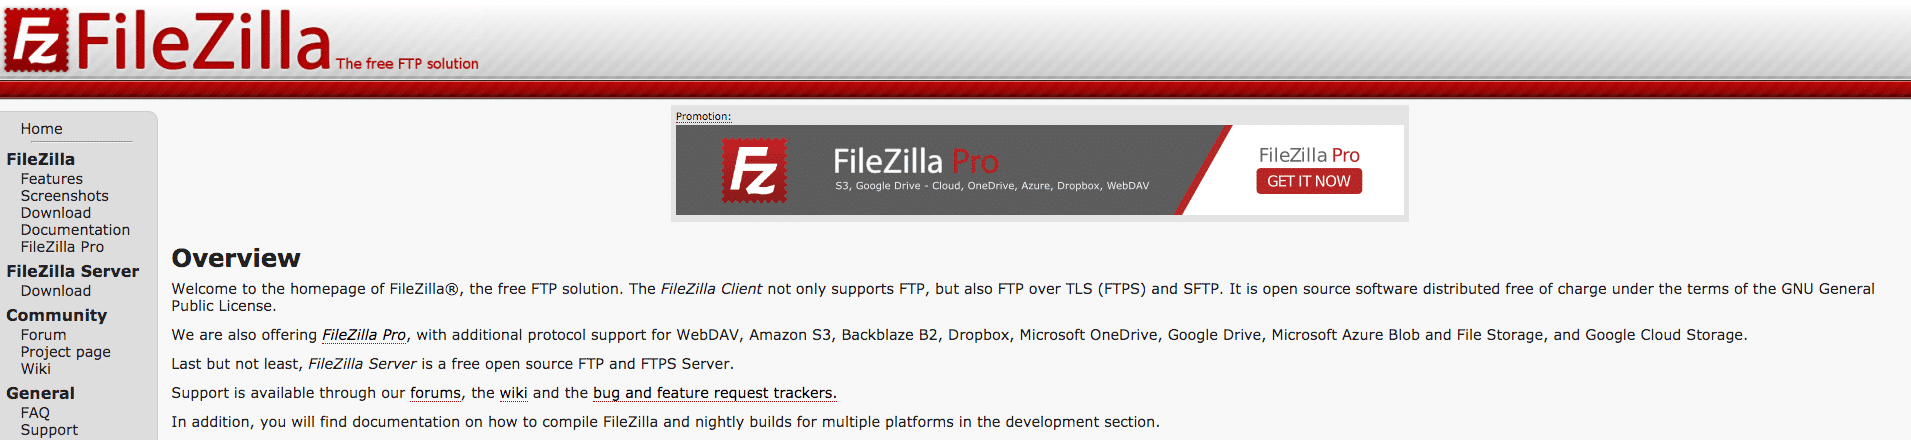 De FileZilla homepage